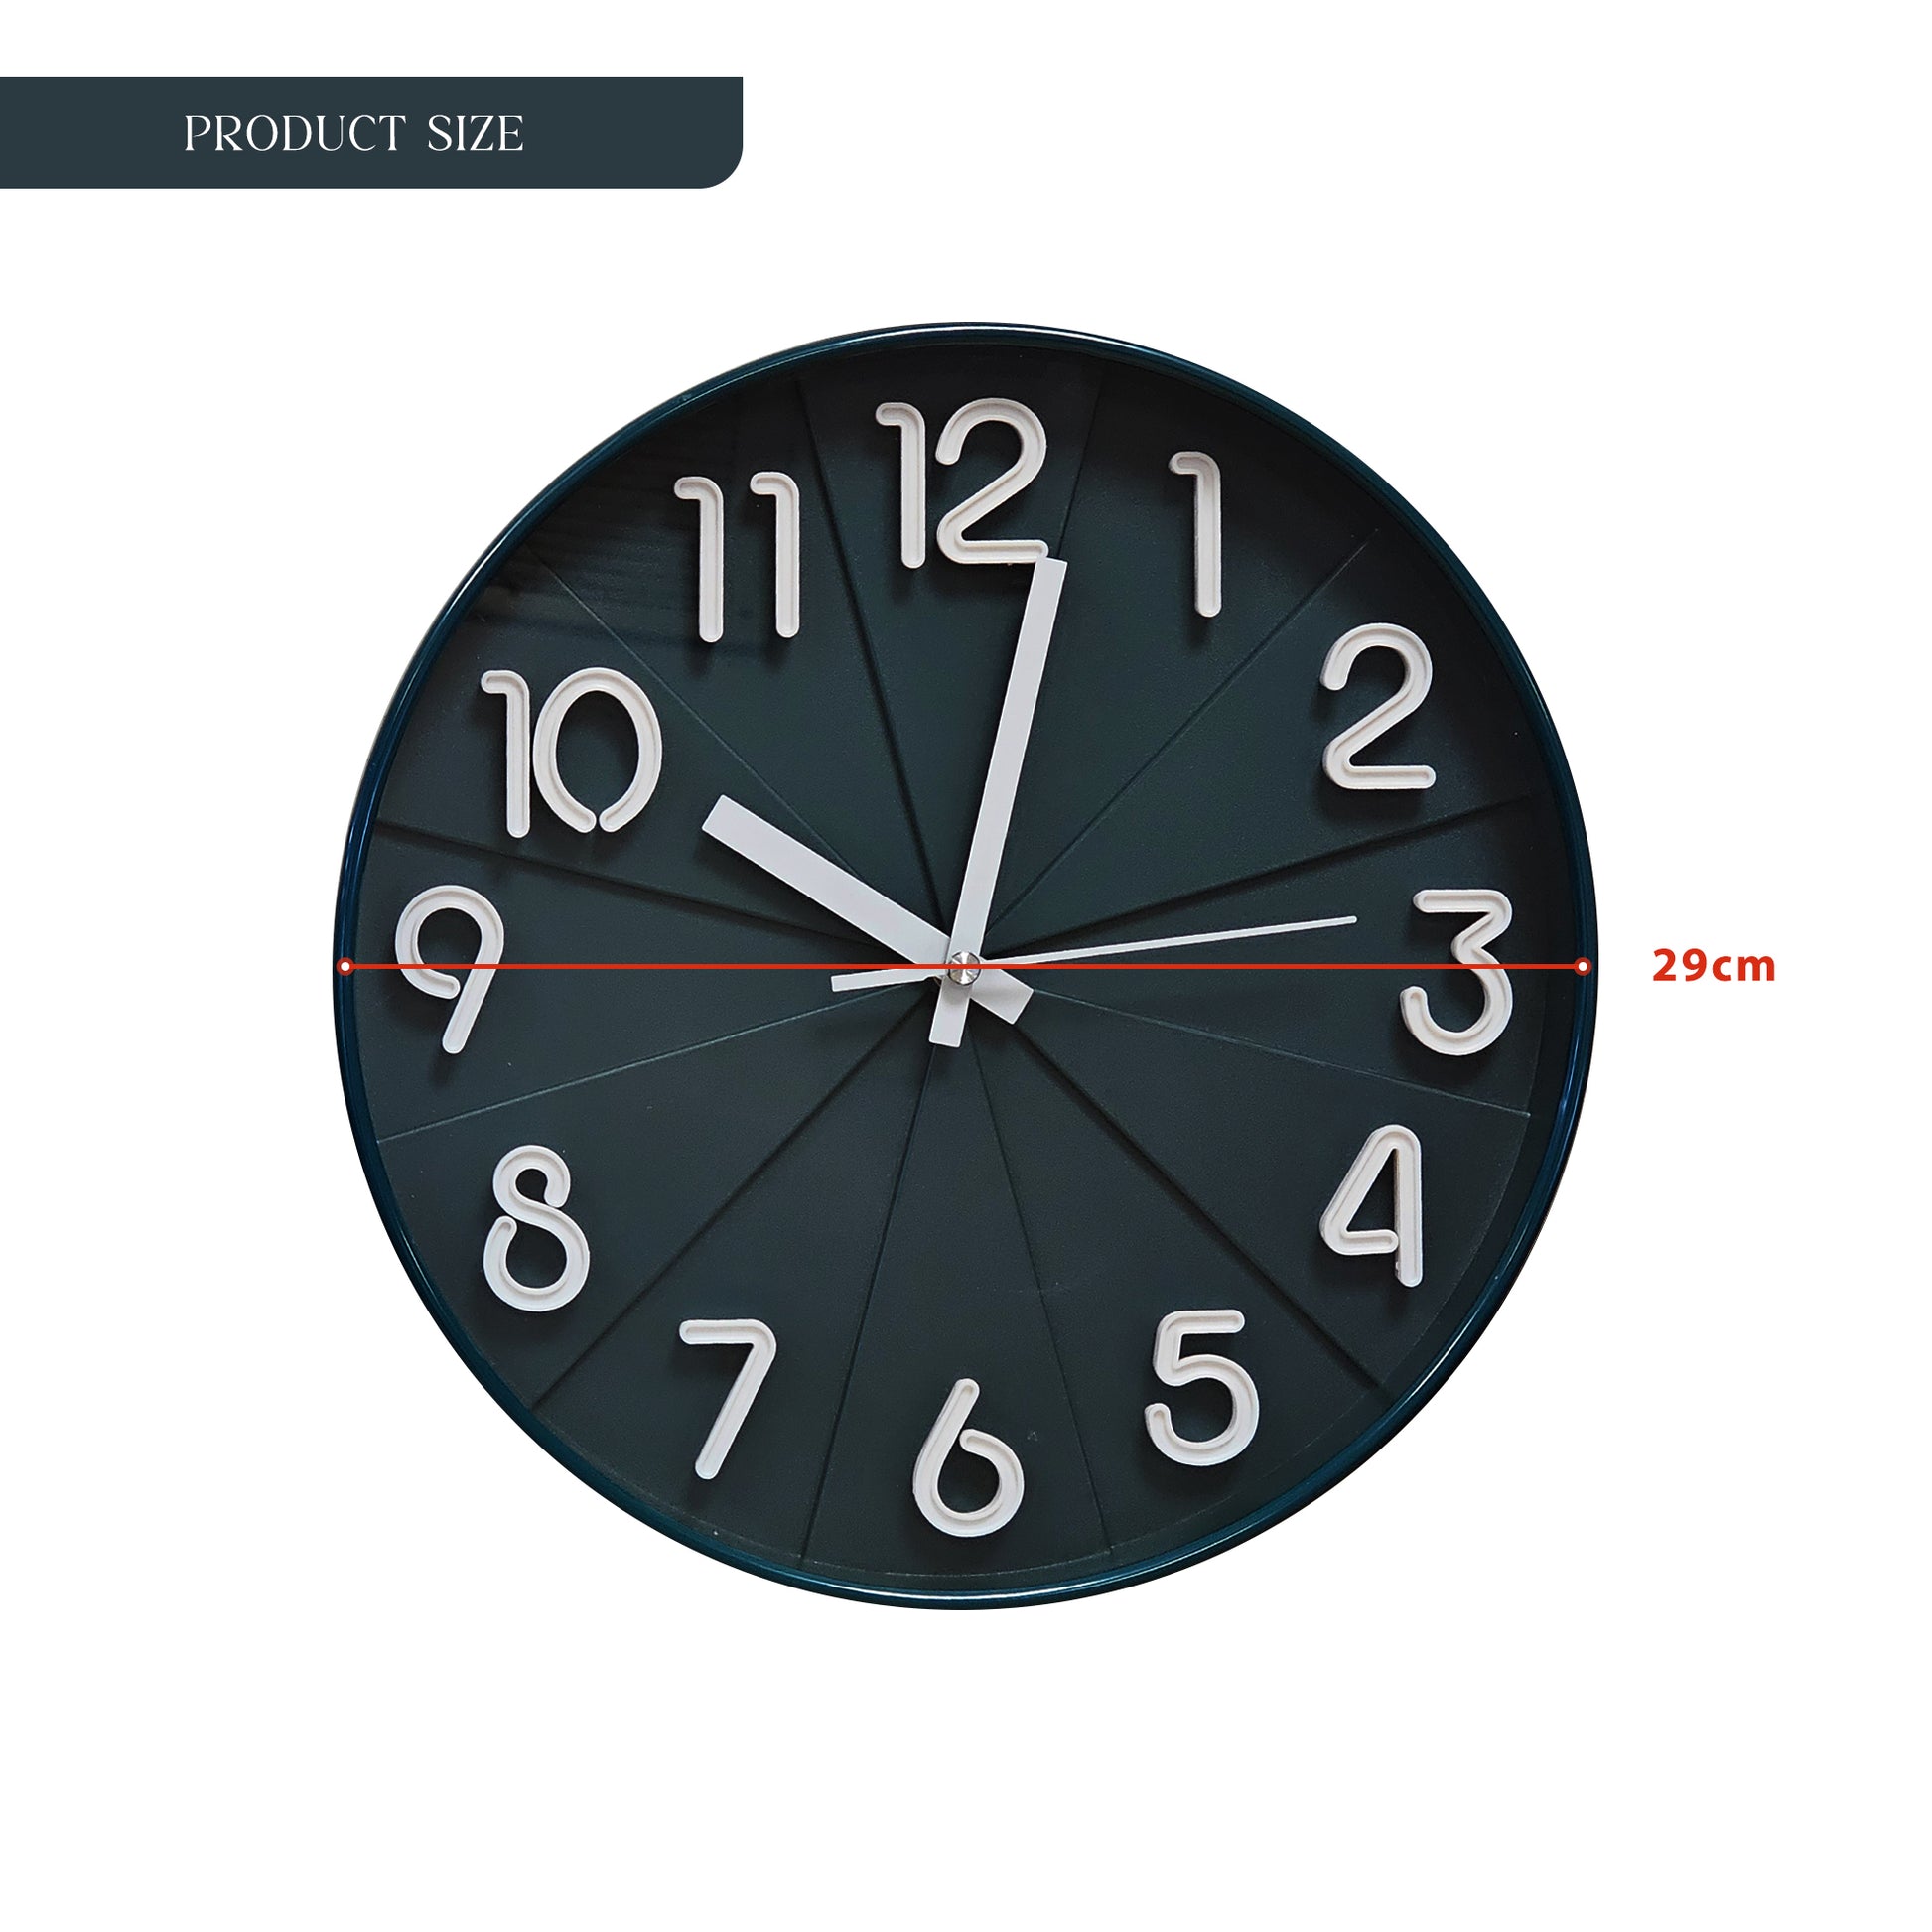 Rolex wall clock